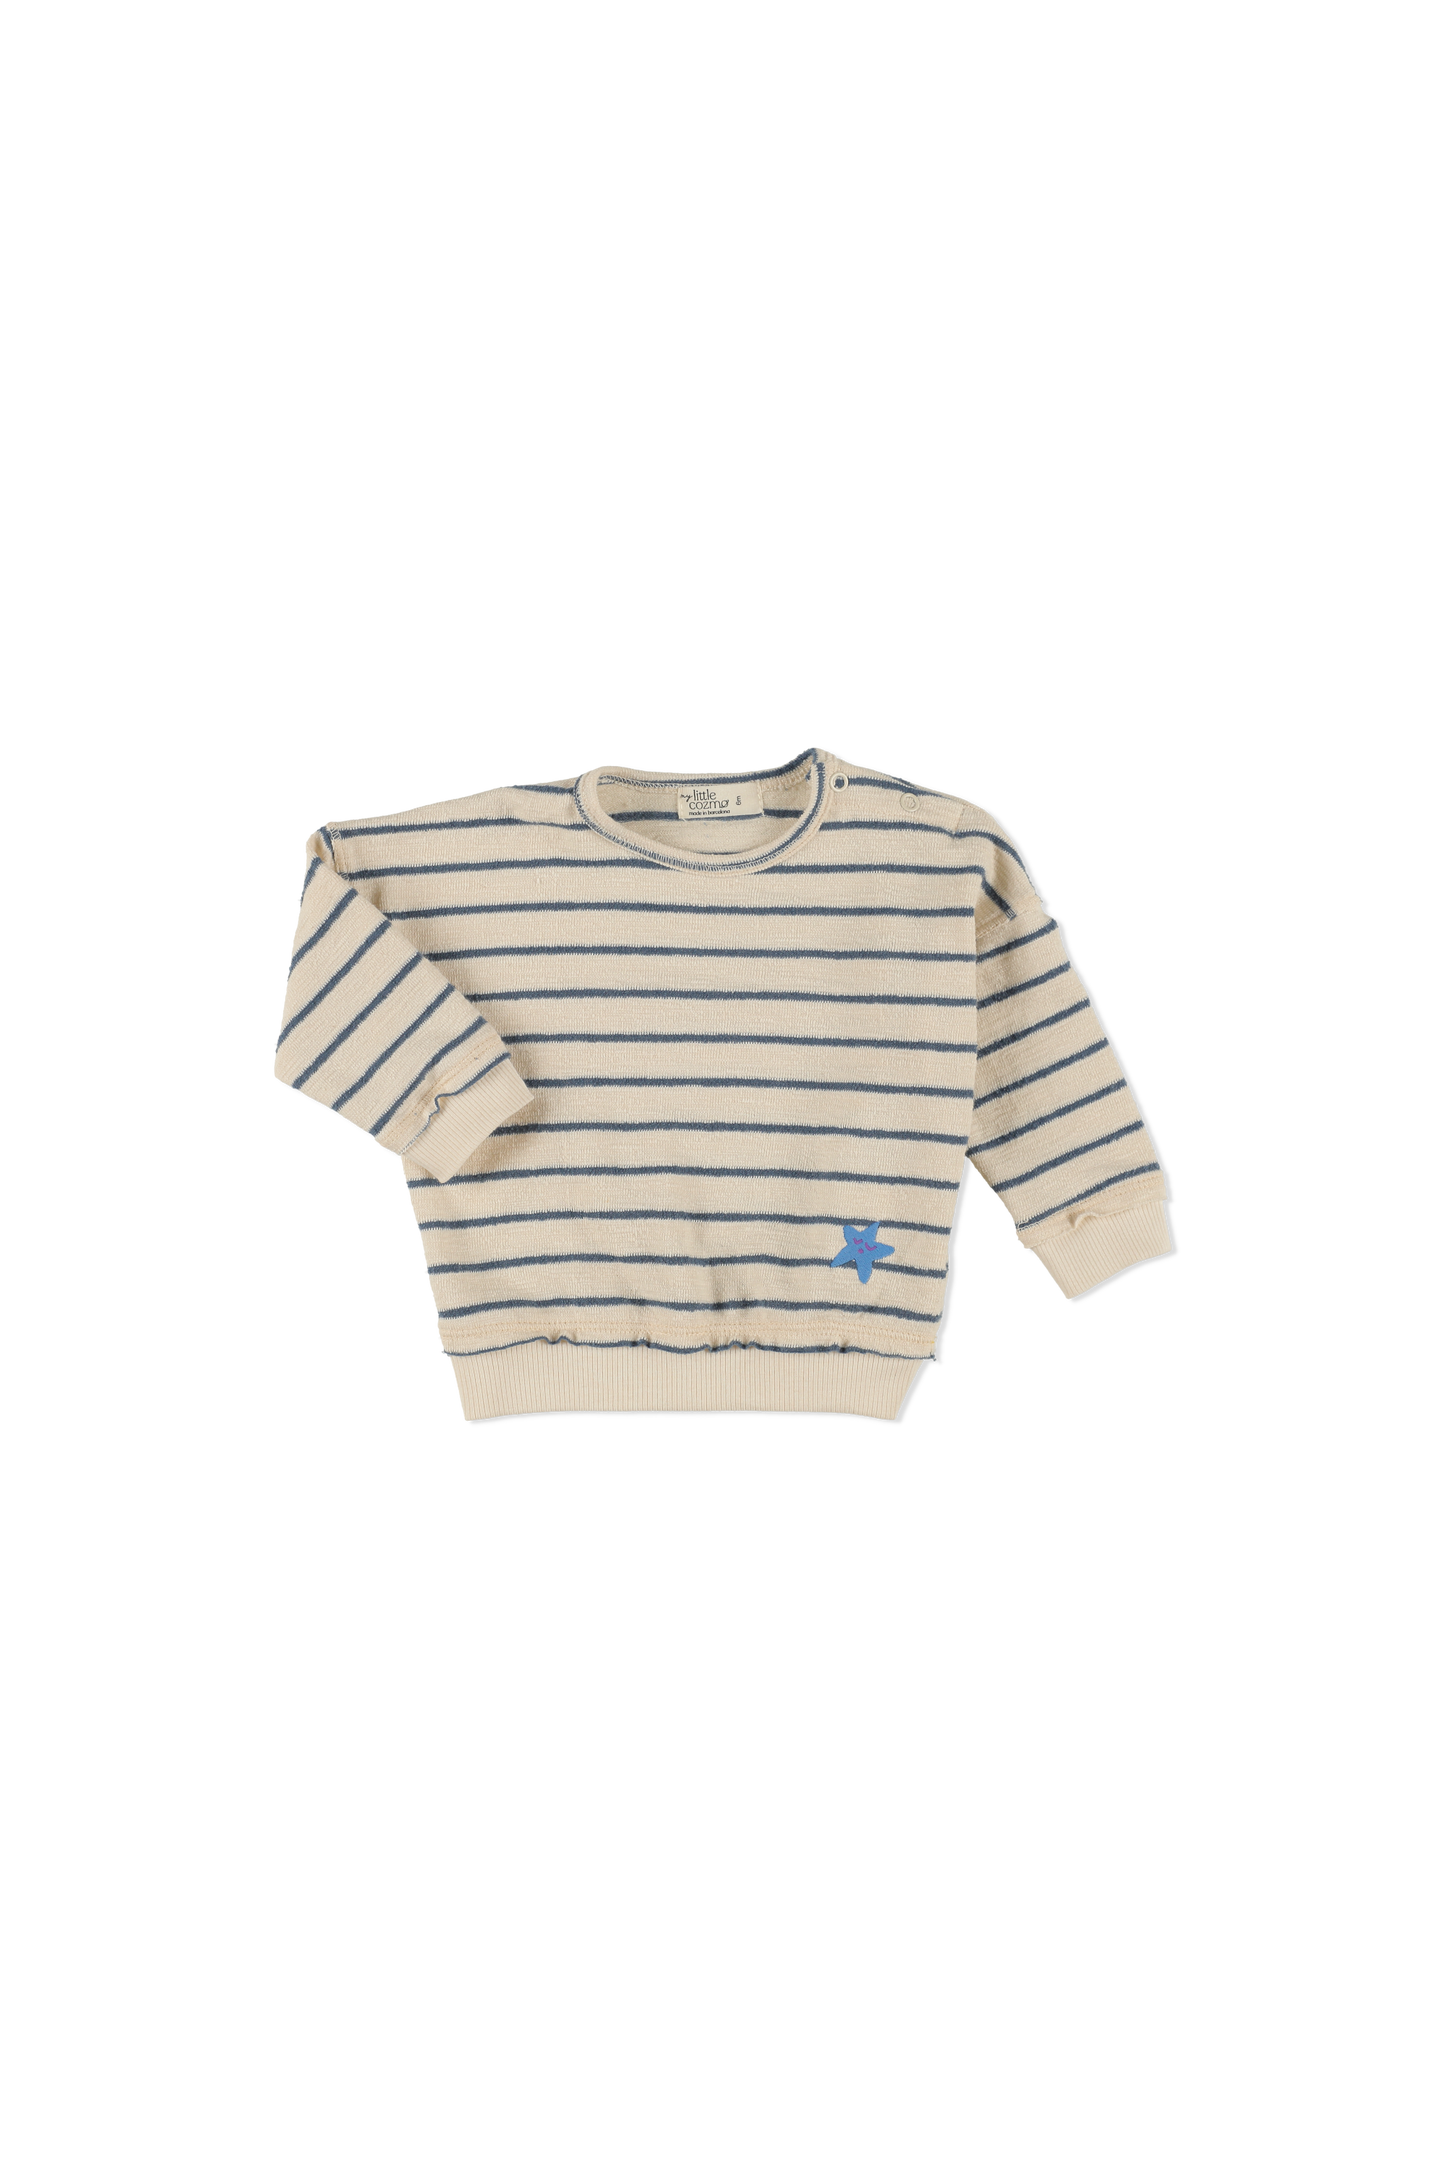 My Little Cozmo Thiago Baby Sweatshirt in Blue Stipes